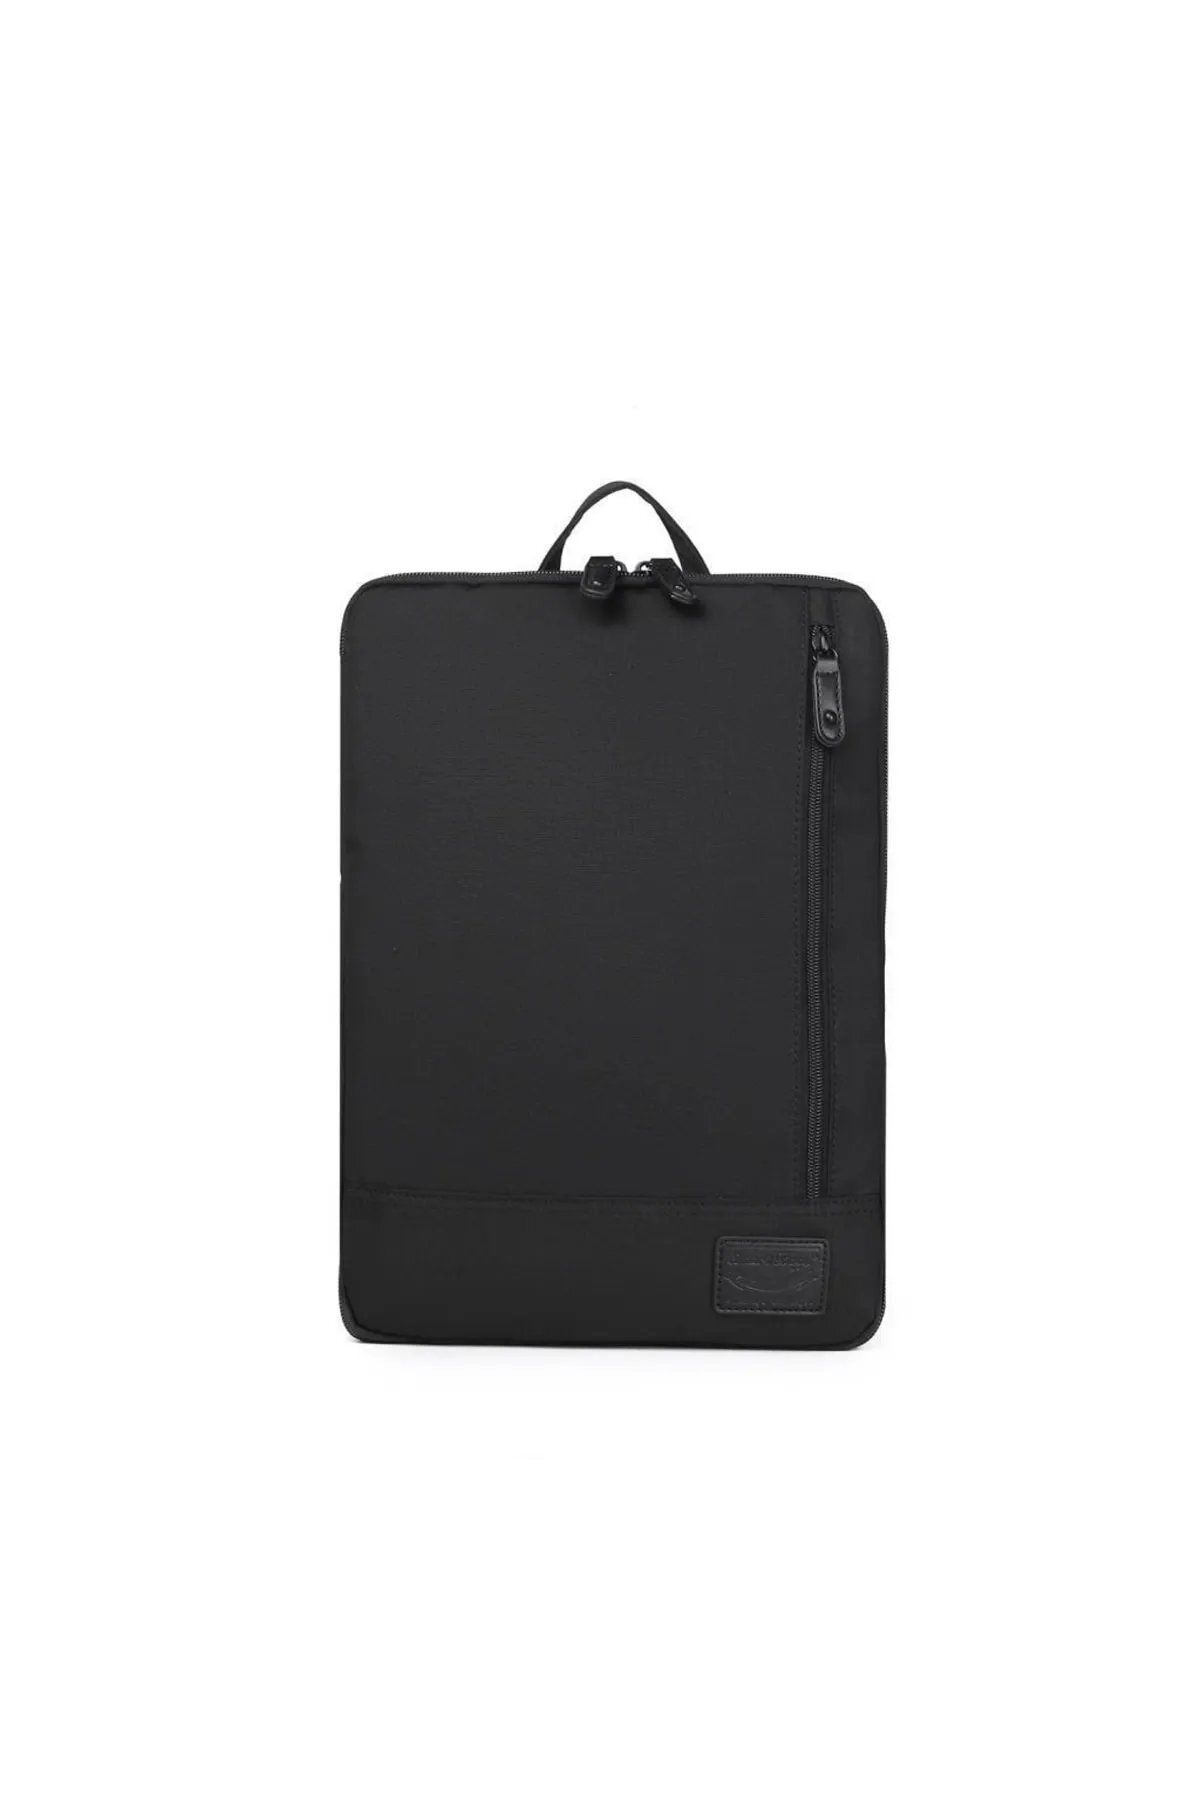 Smart Bags Unisex Macbook Air - Macbook Pro 15&15.6 İnç Uyumlu Laptop Kılıfı 3191